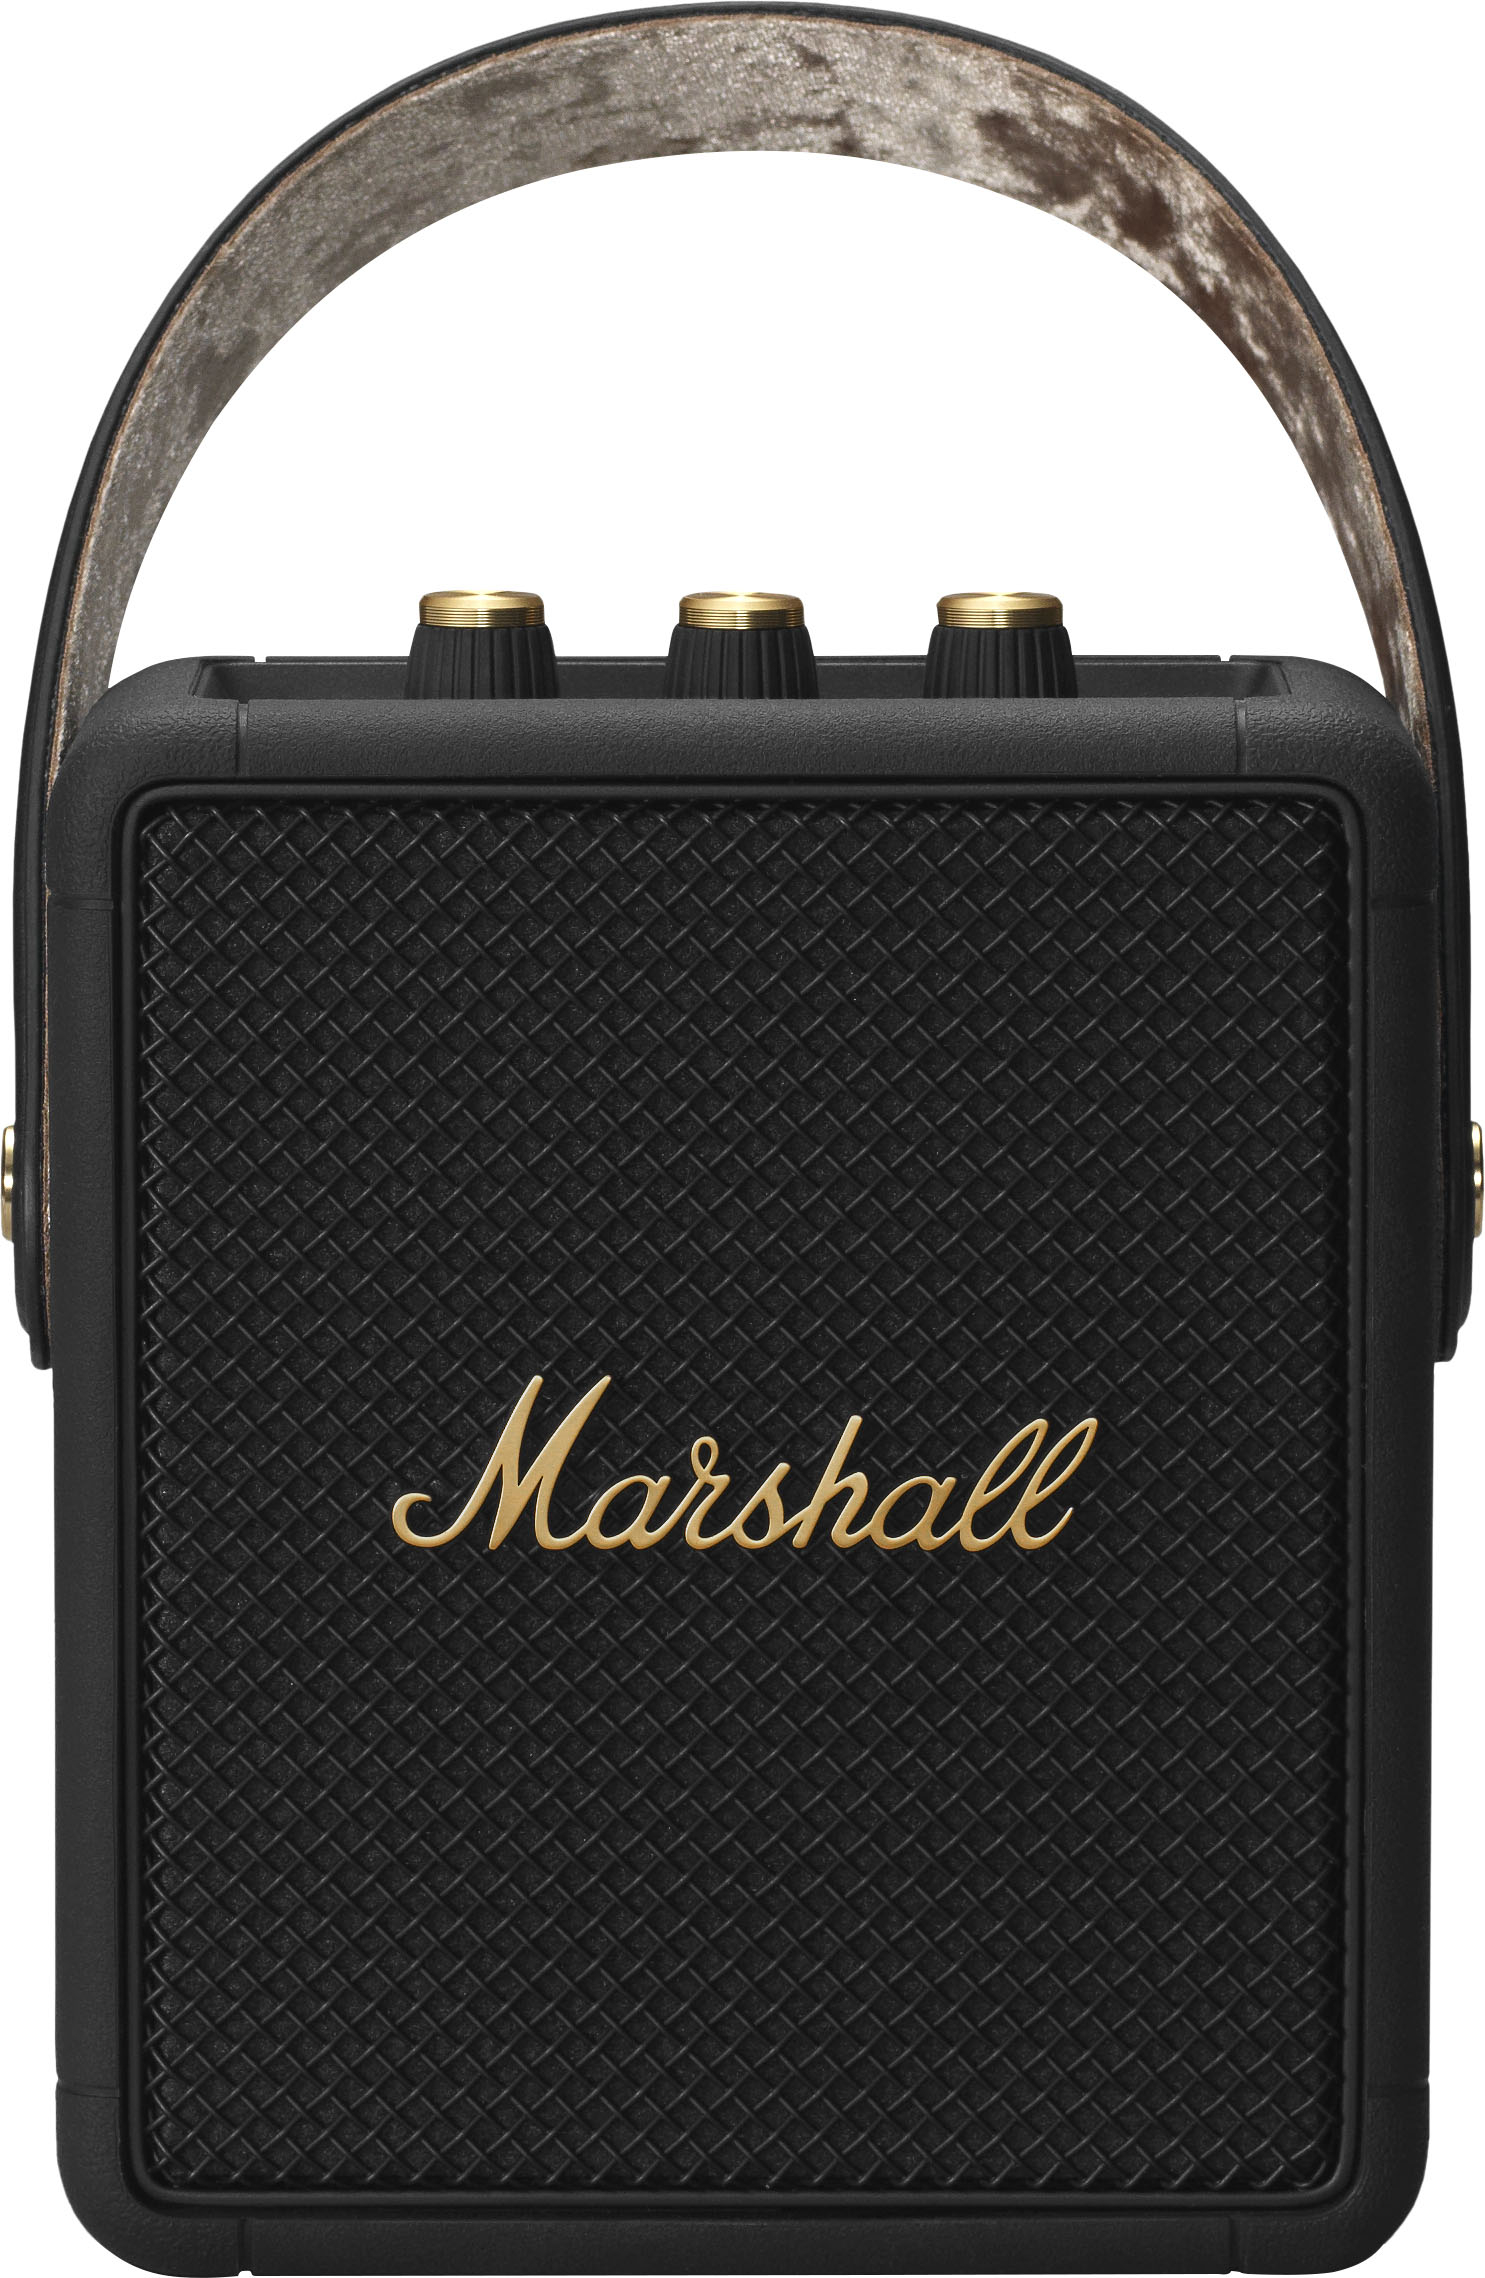 Marshall Stockwell II Portable Bluetooth Speaker Black & Brass 